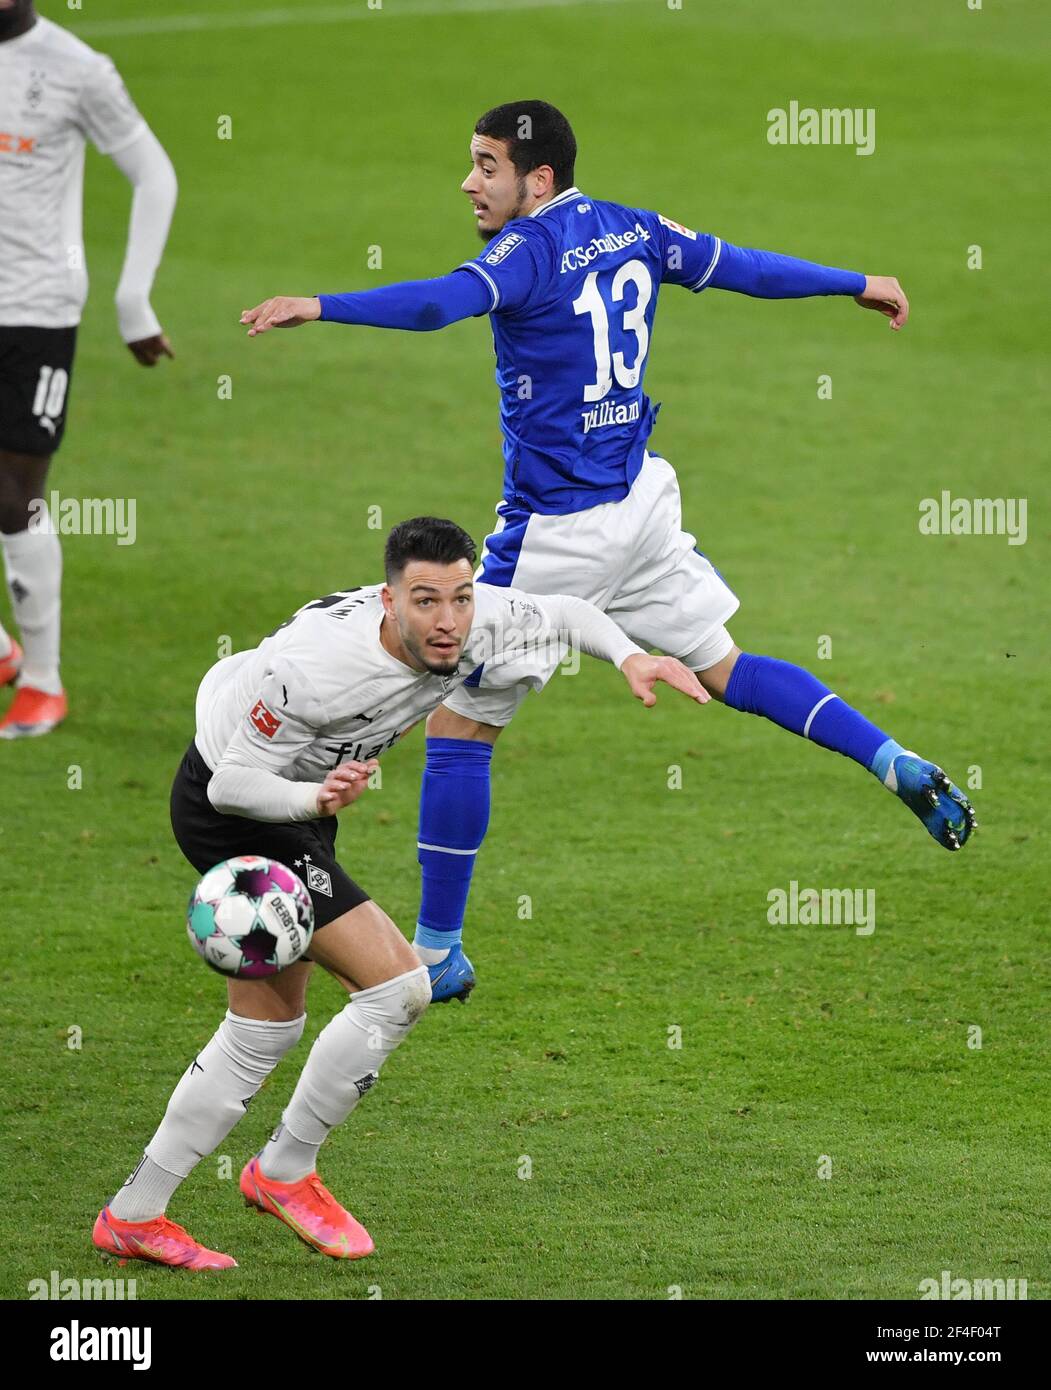 William (FC Schalke 04), re., gegen Ramy Bensebaini (Borussia Moenchengladbach)  20.02.2021, Fussball GER, Saison 2020 2021, 1. Bundesliga, 26. Spielt Stock Photo